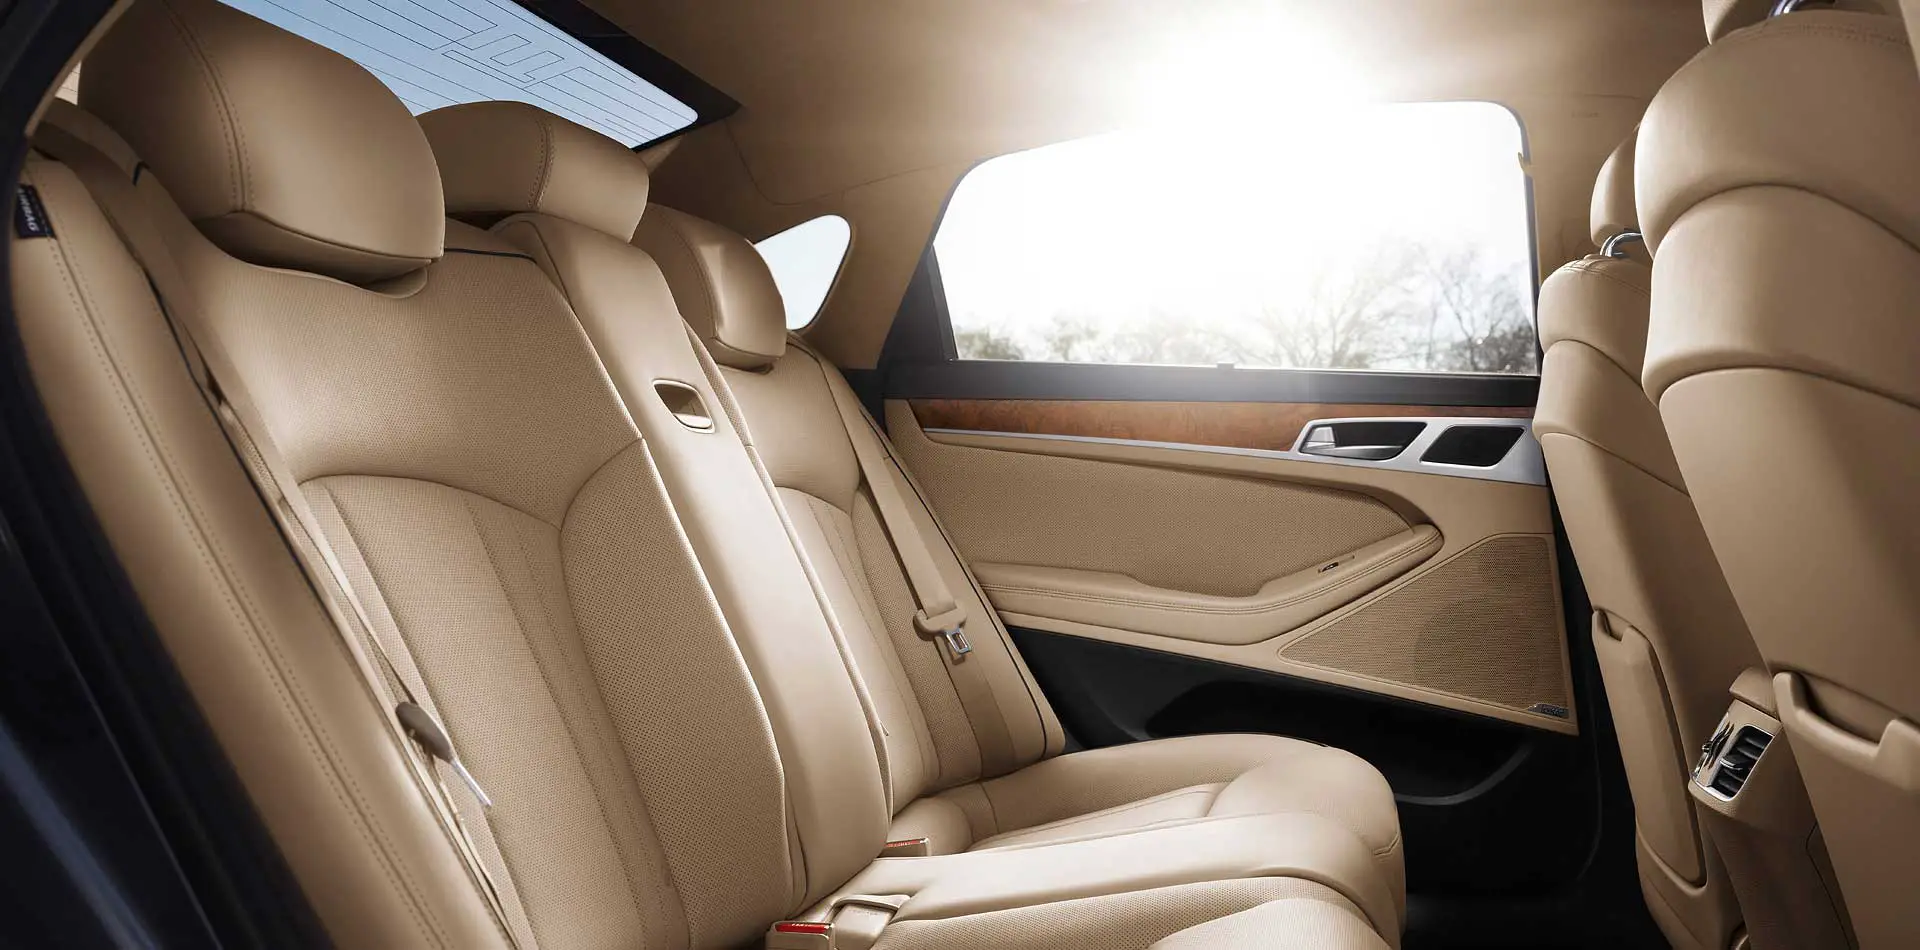 Hyundai Genesis 5.0 Interior Back Seats